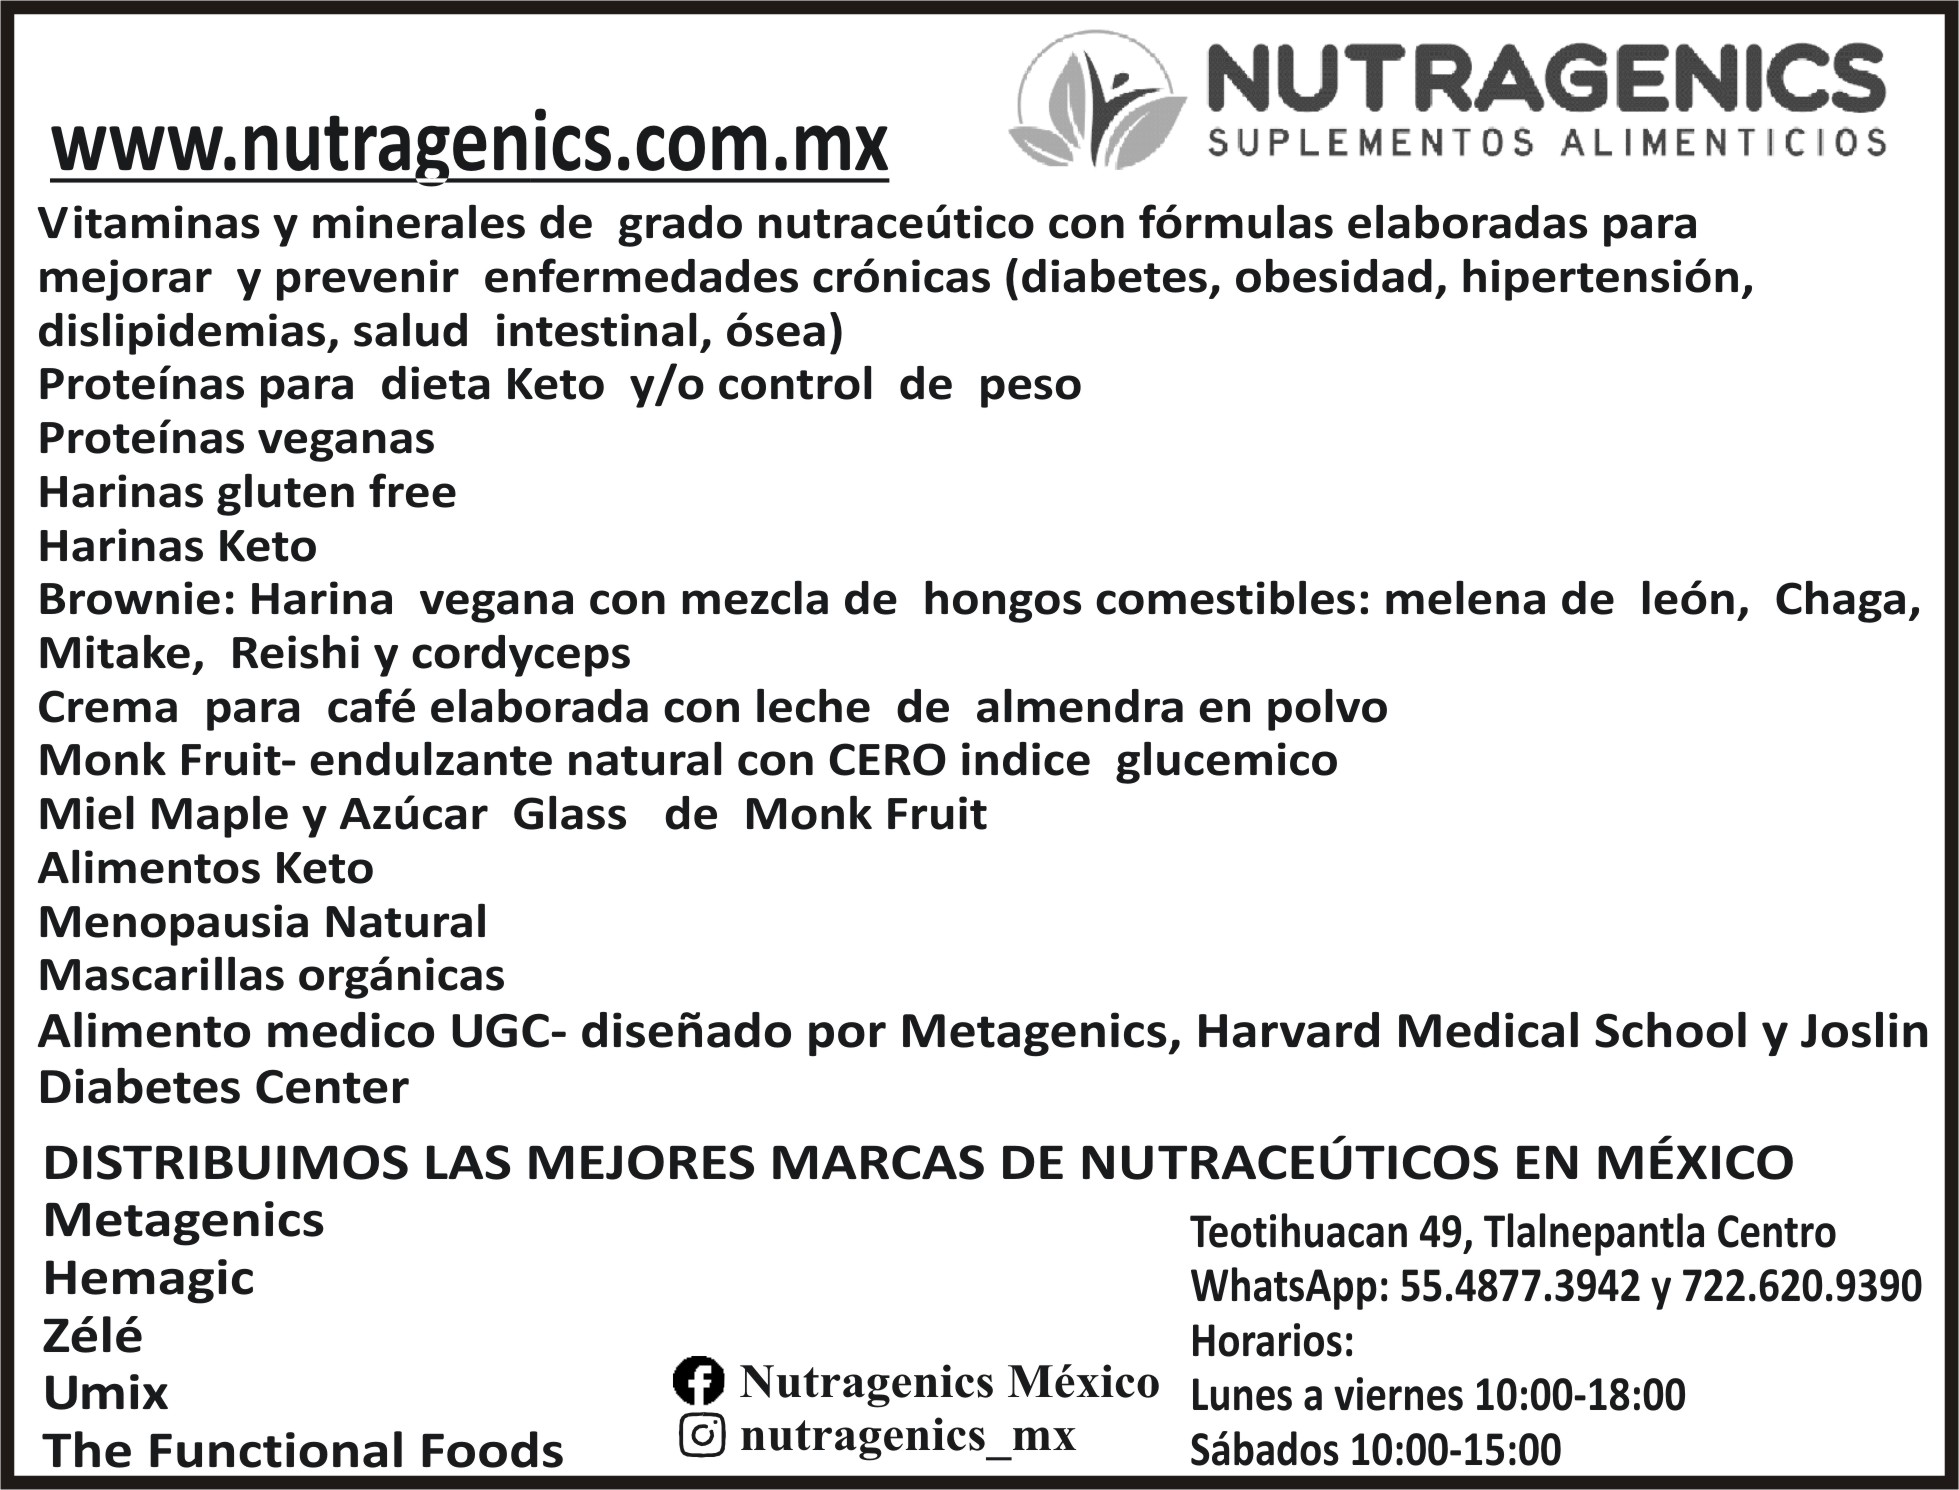 NUTRAGENICS

SUPLEMENTOS ALIMENTICIOS

5548773942 /